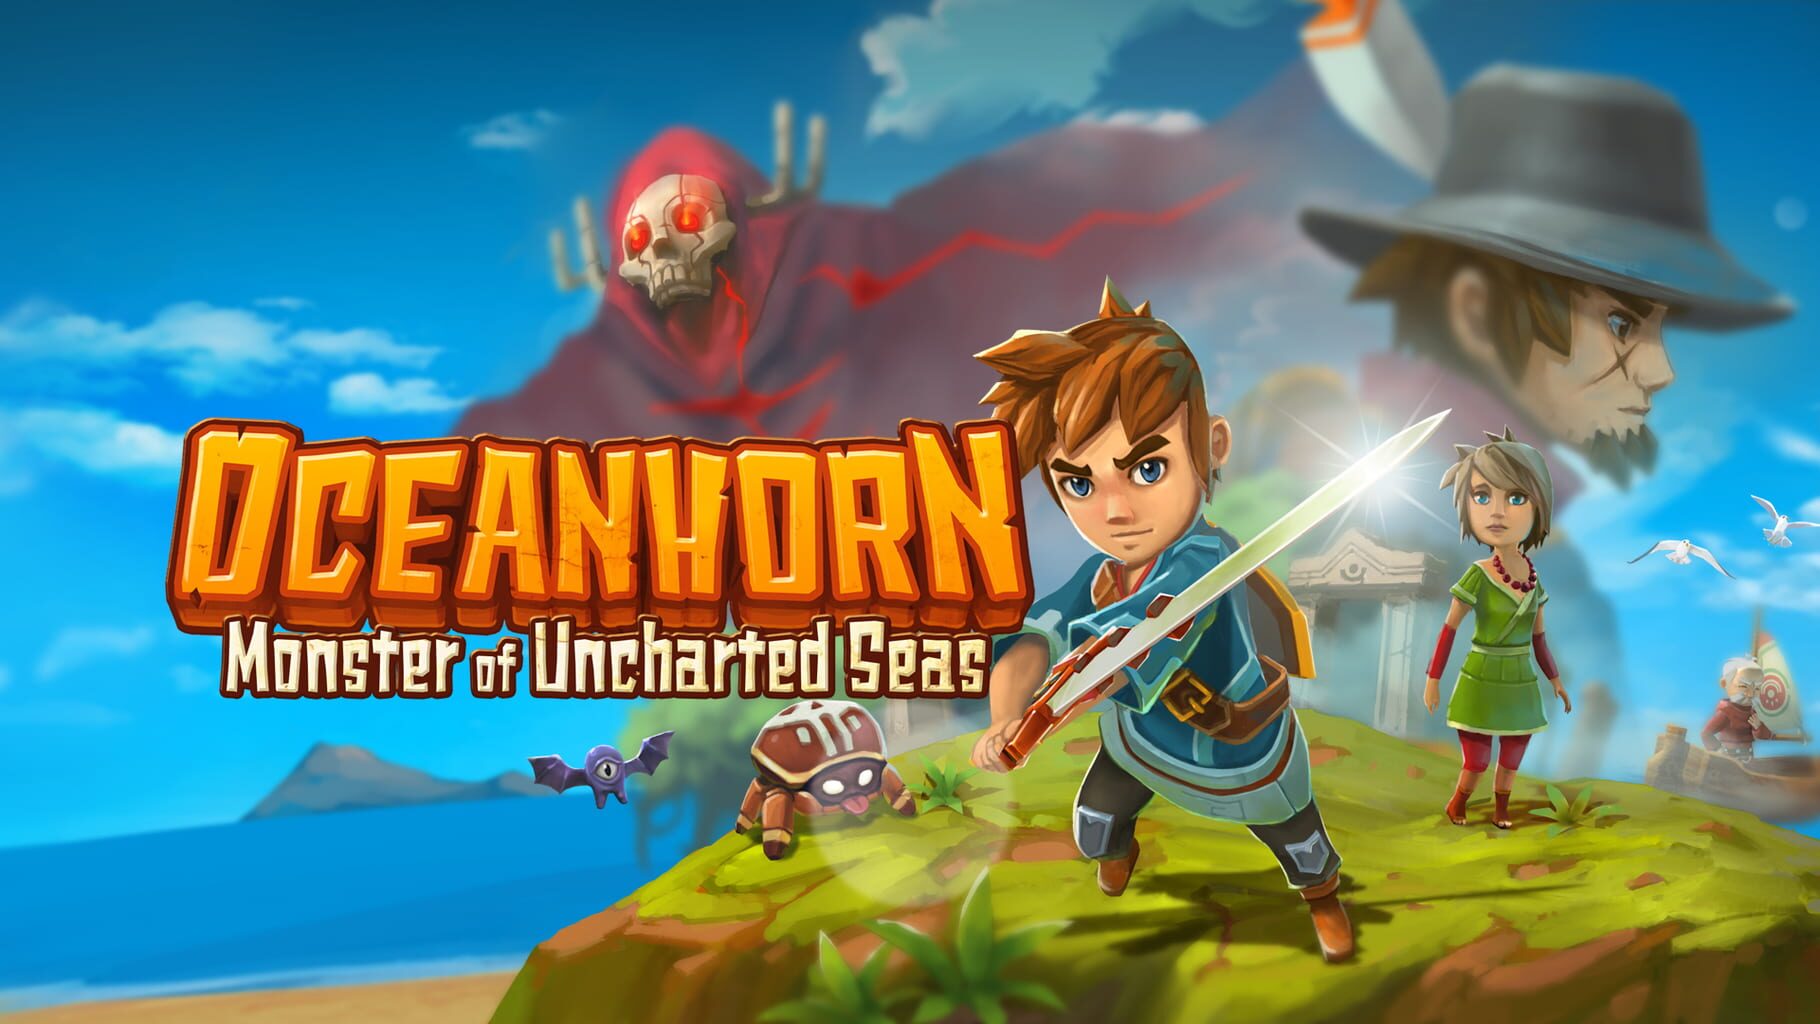 Oceanhorn: Monster of Uncharted Seas artwork